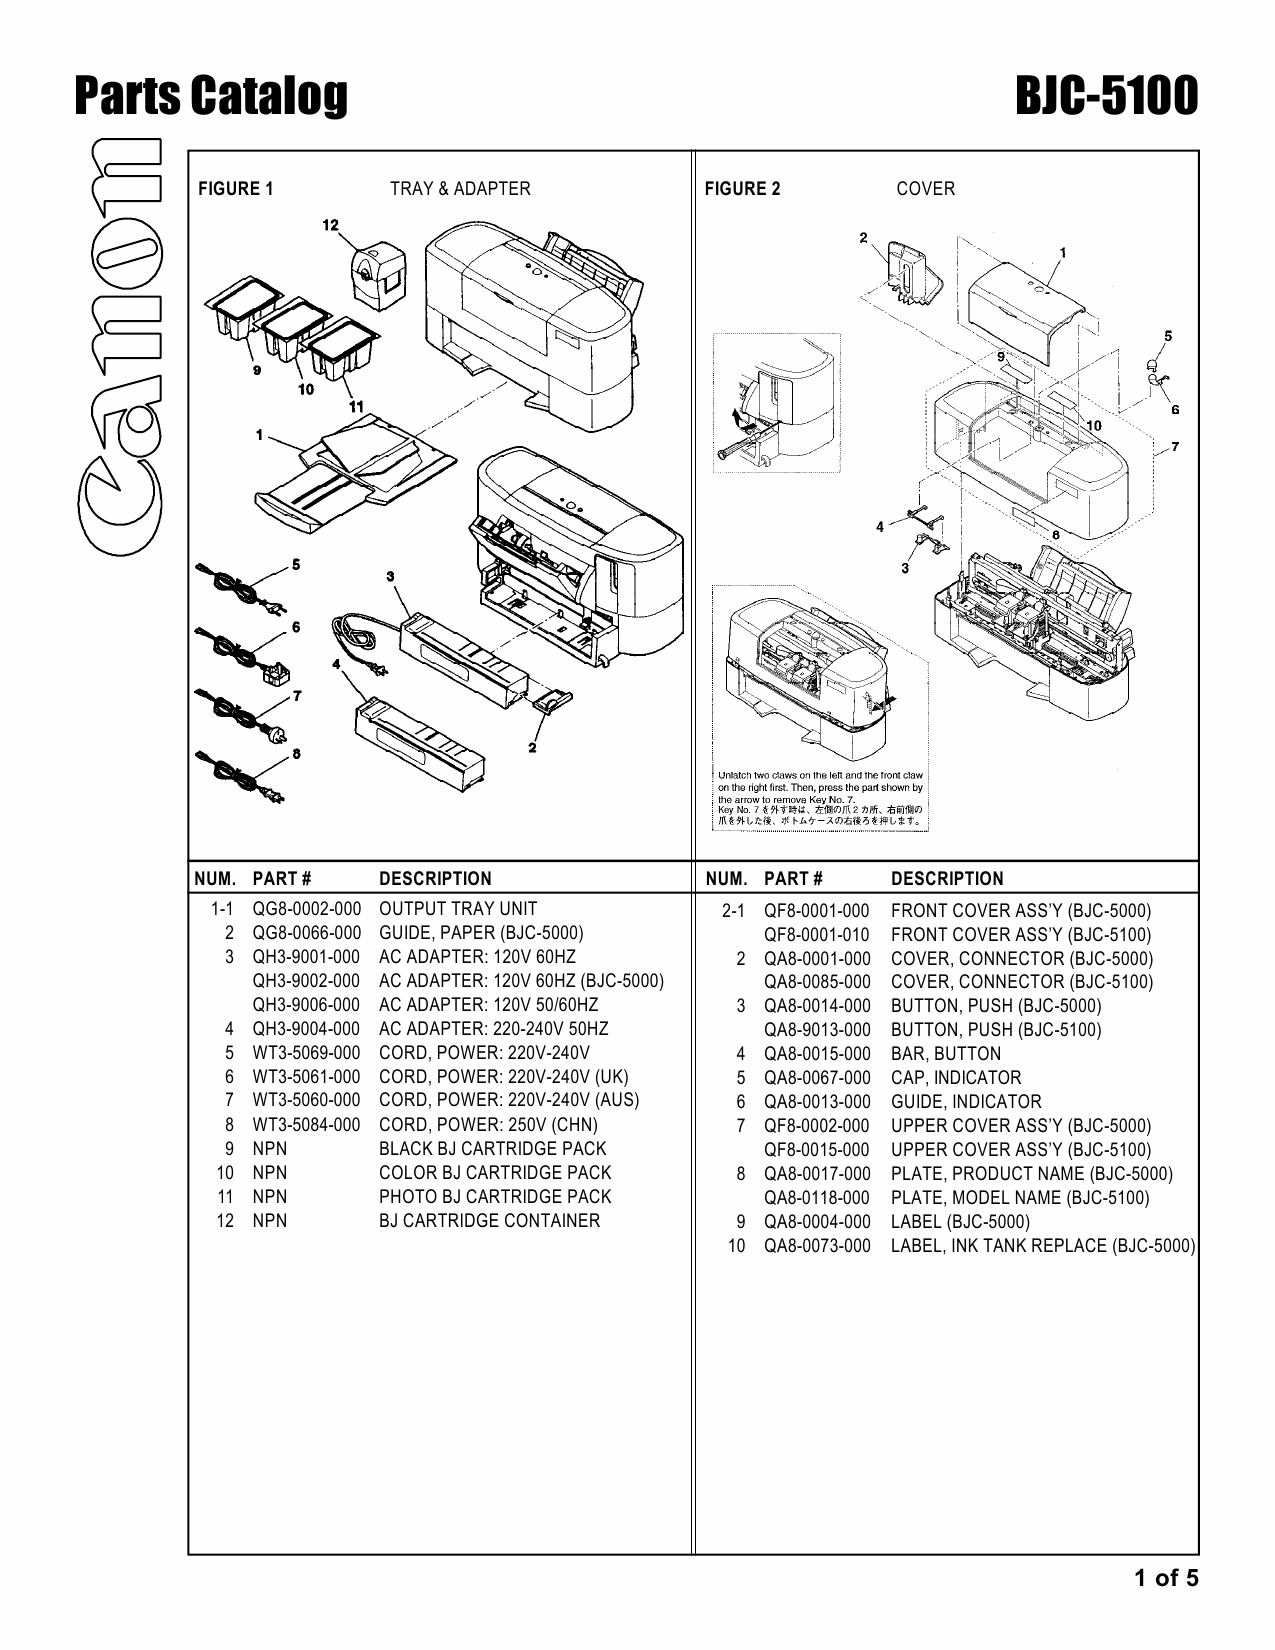 Canon BubbleJet BJC-5100 Parts Catalog Manual-2